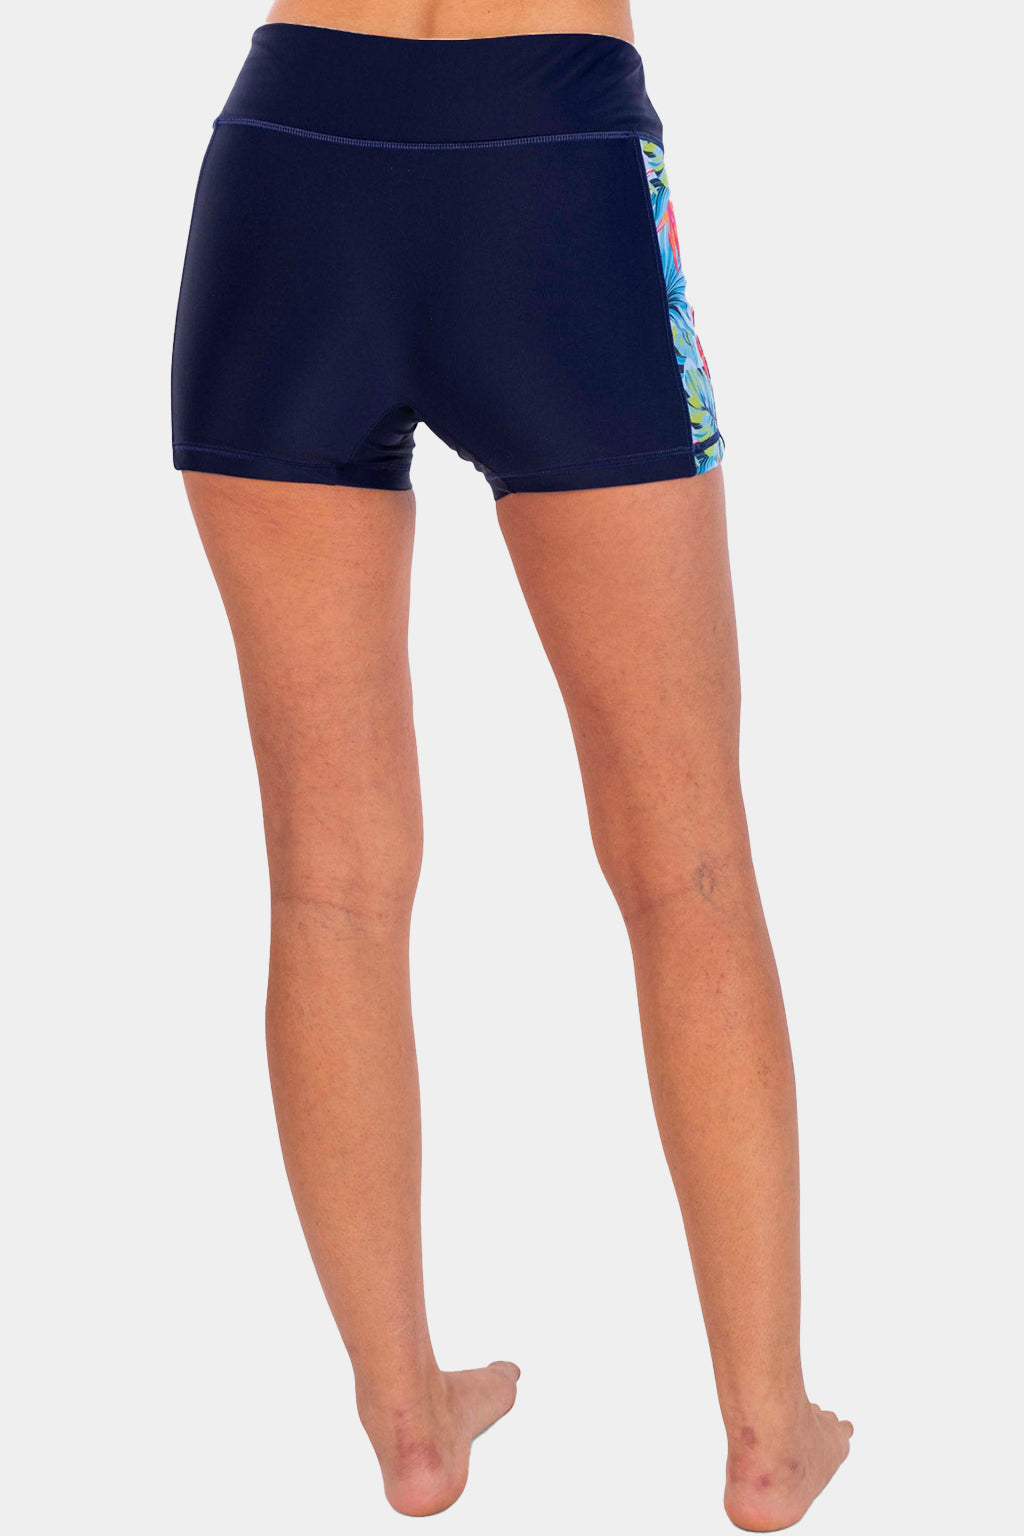 Coega - Ladies Surf Shorts